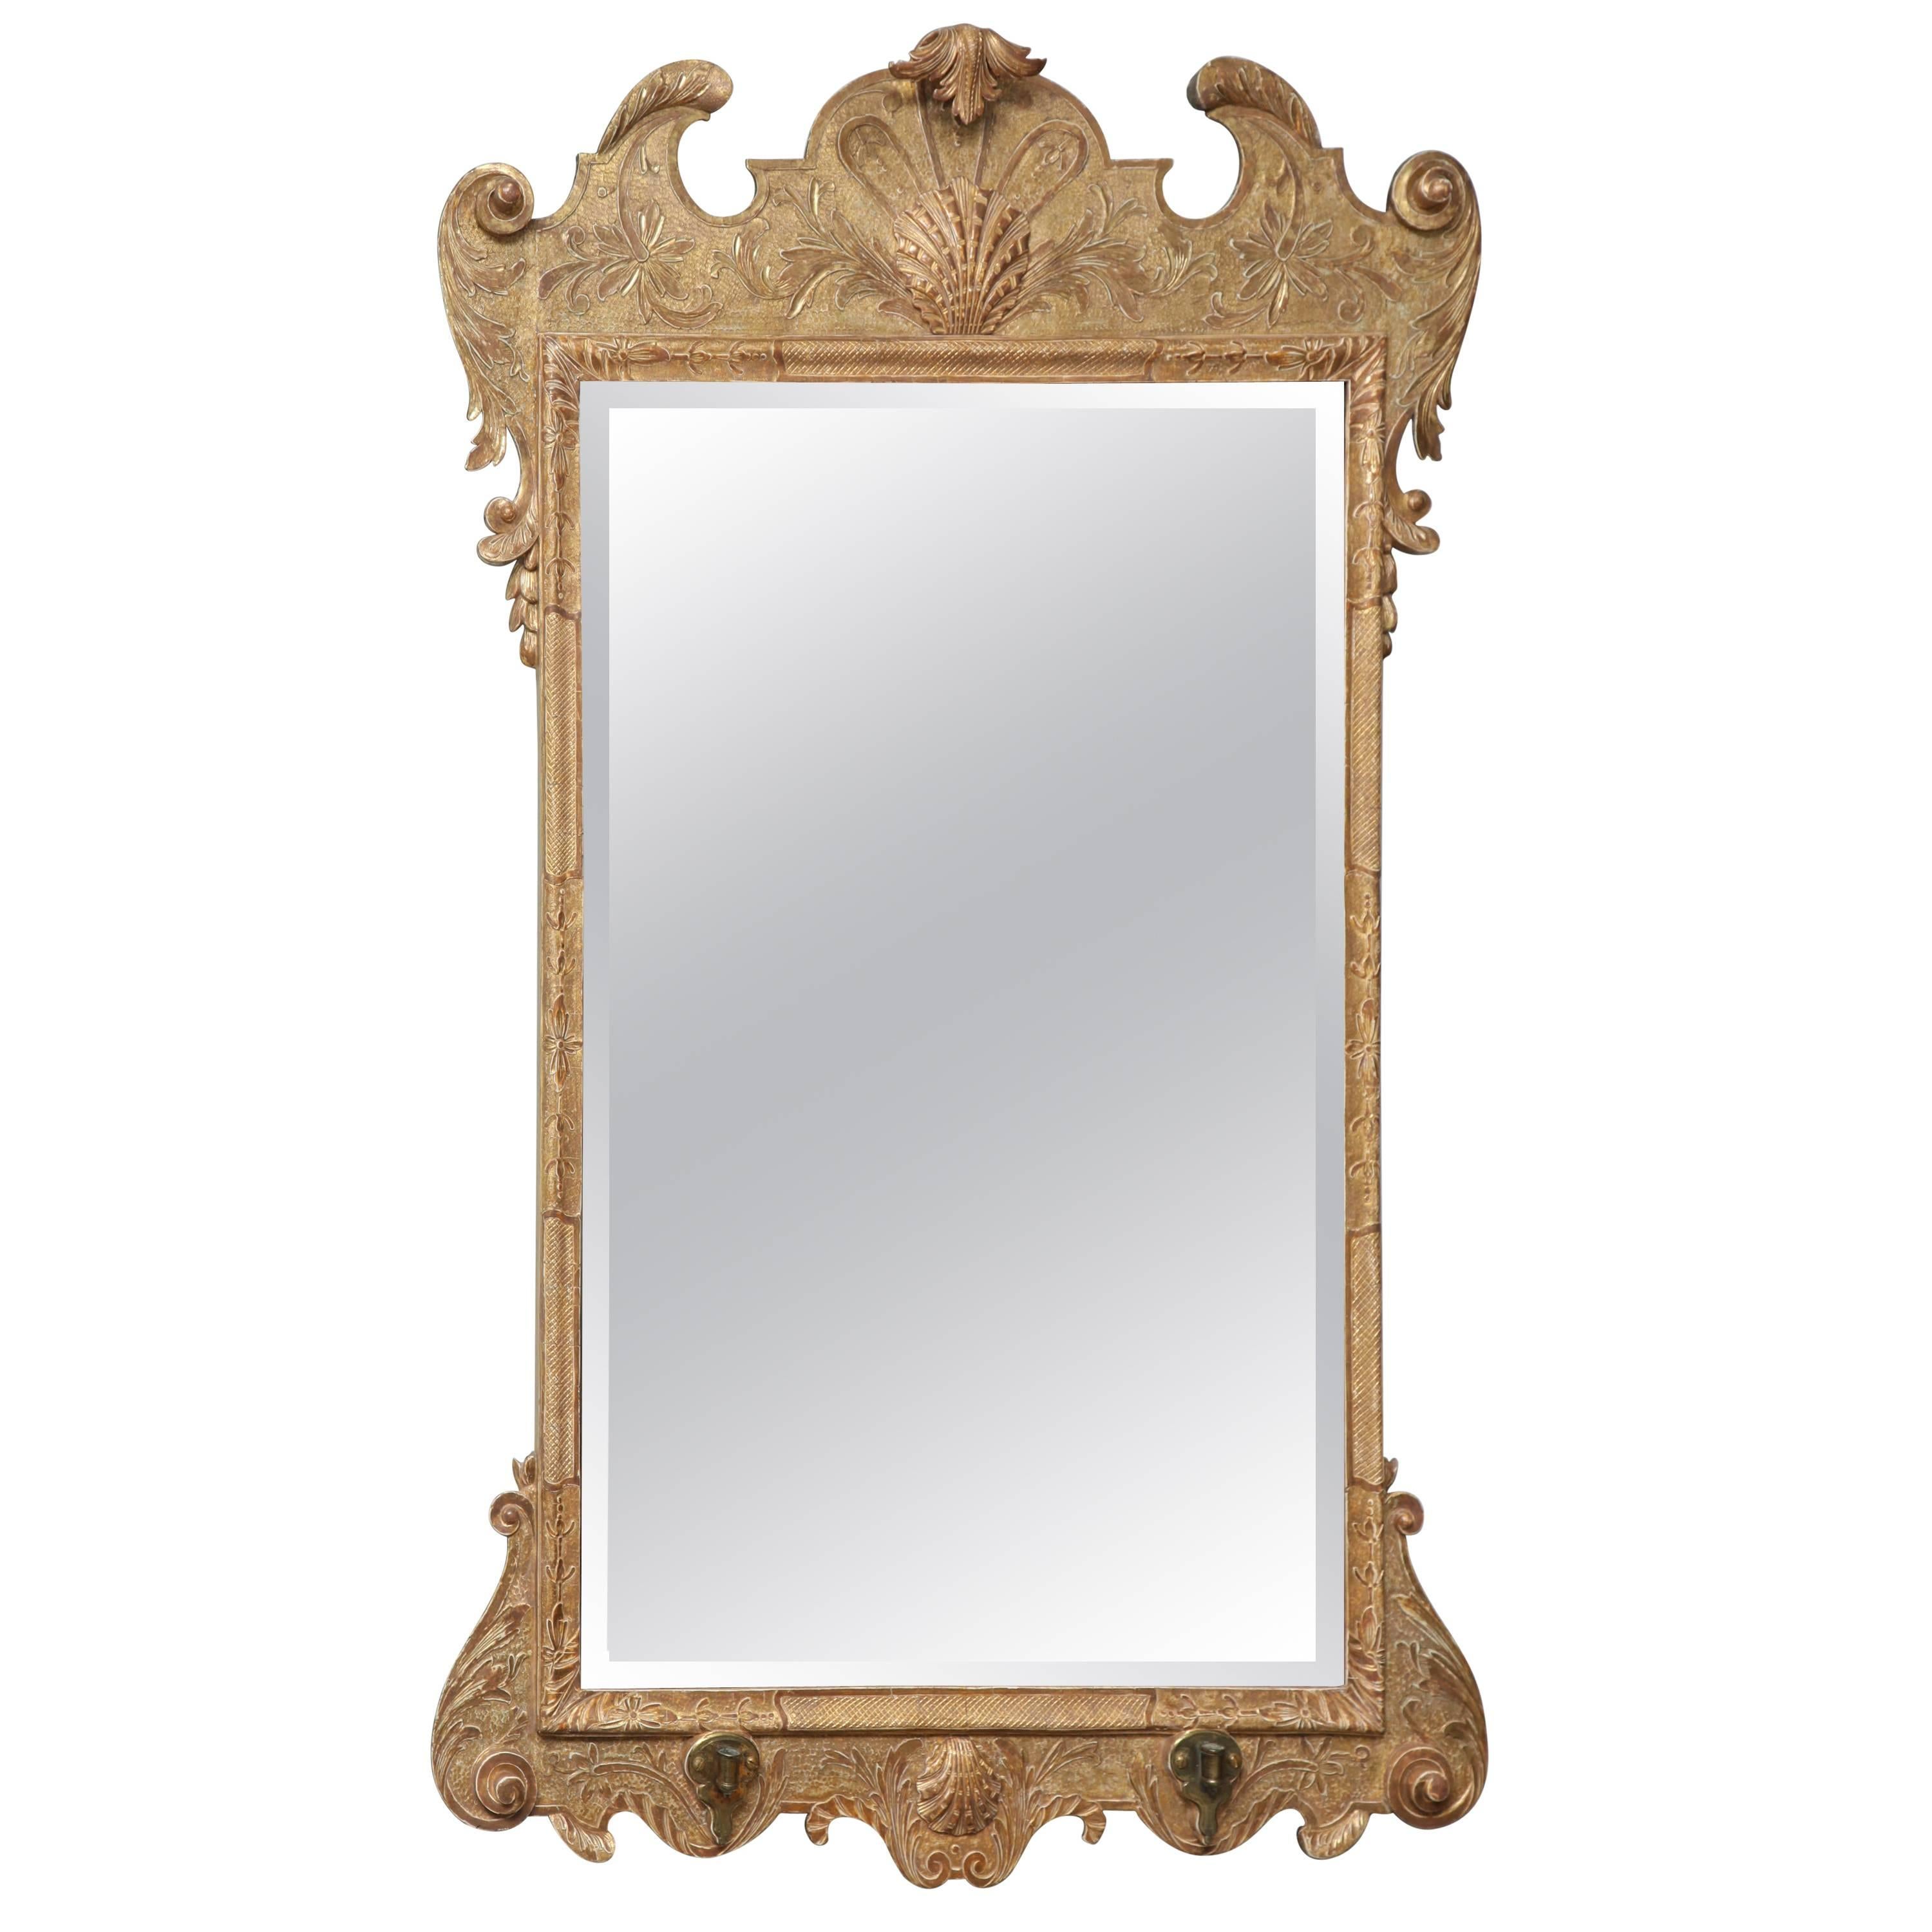 Very Fine George I Gilt Gesso Carved Mirror